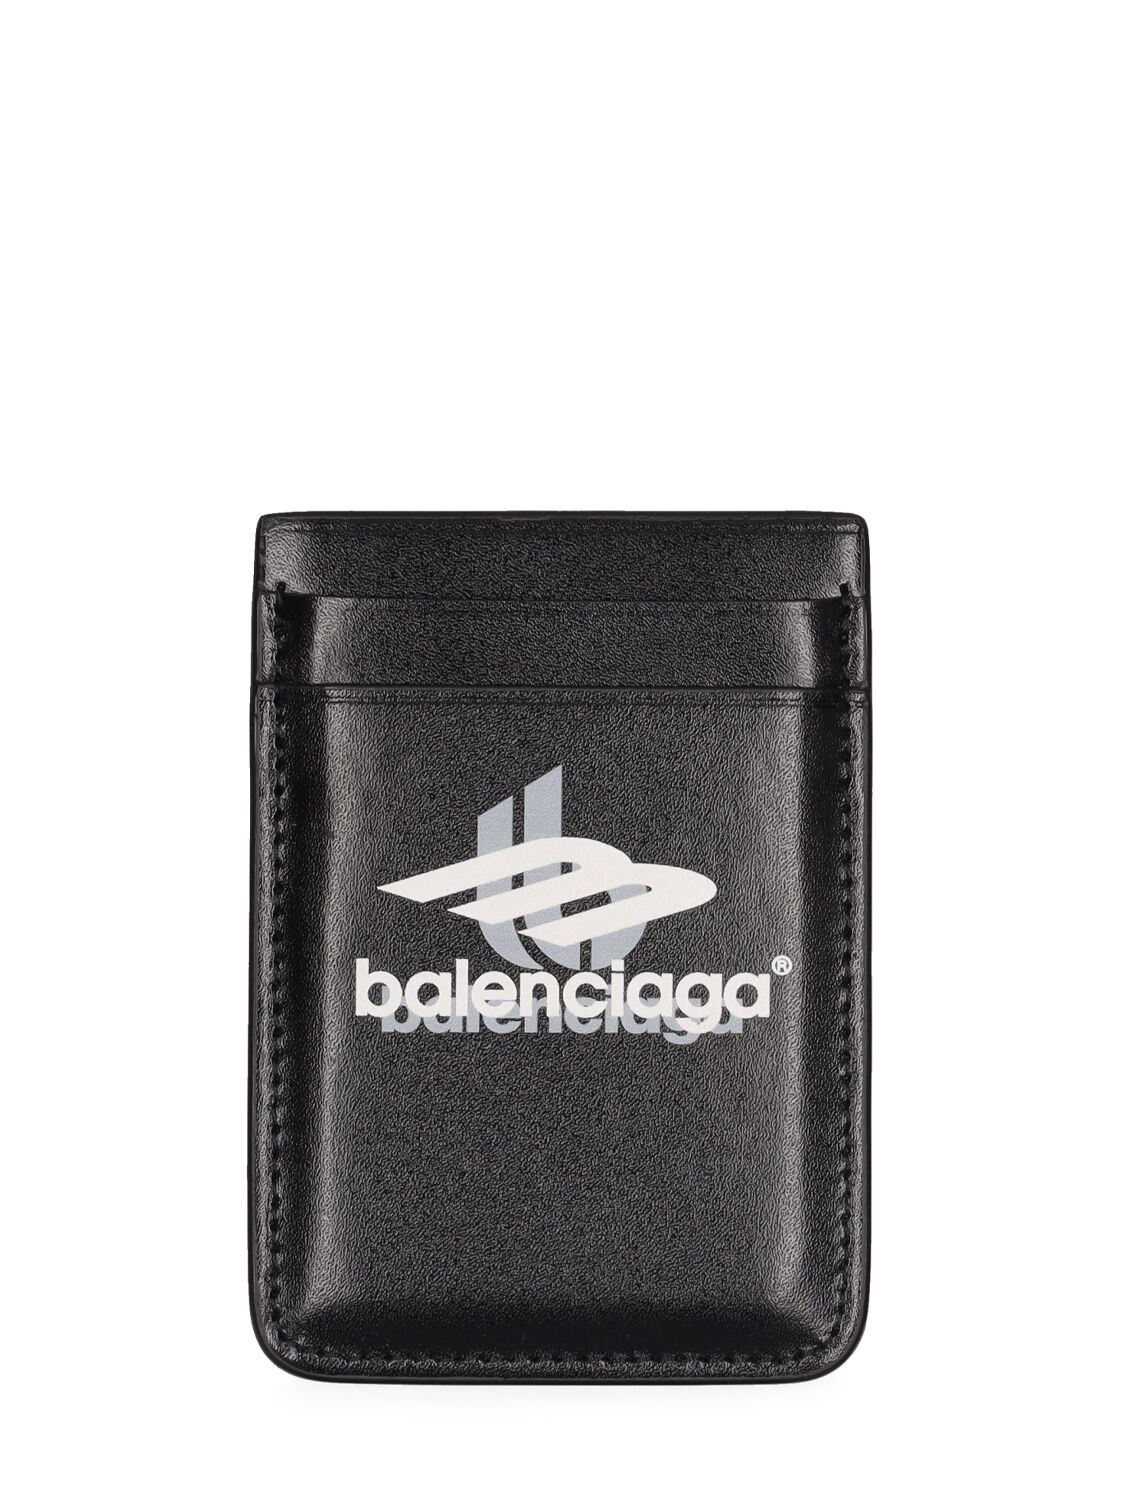 Balenciaga Magnet Leather Cash & Card Holder In Schwarz